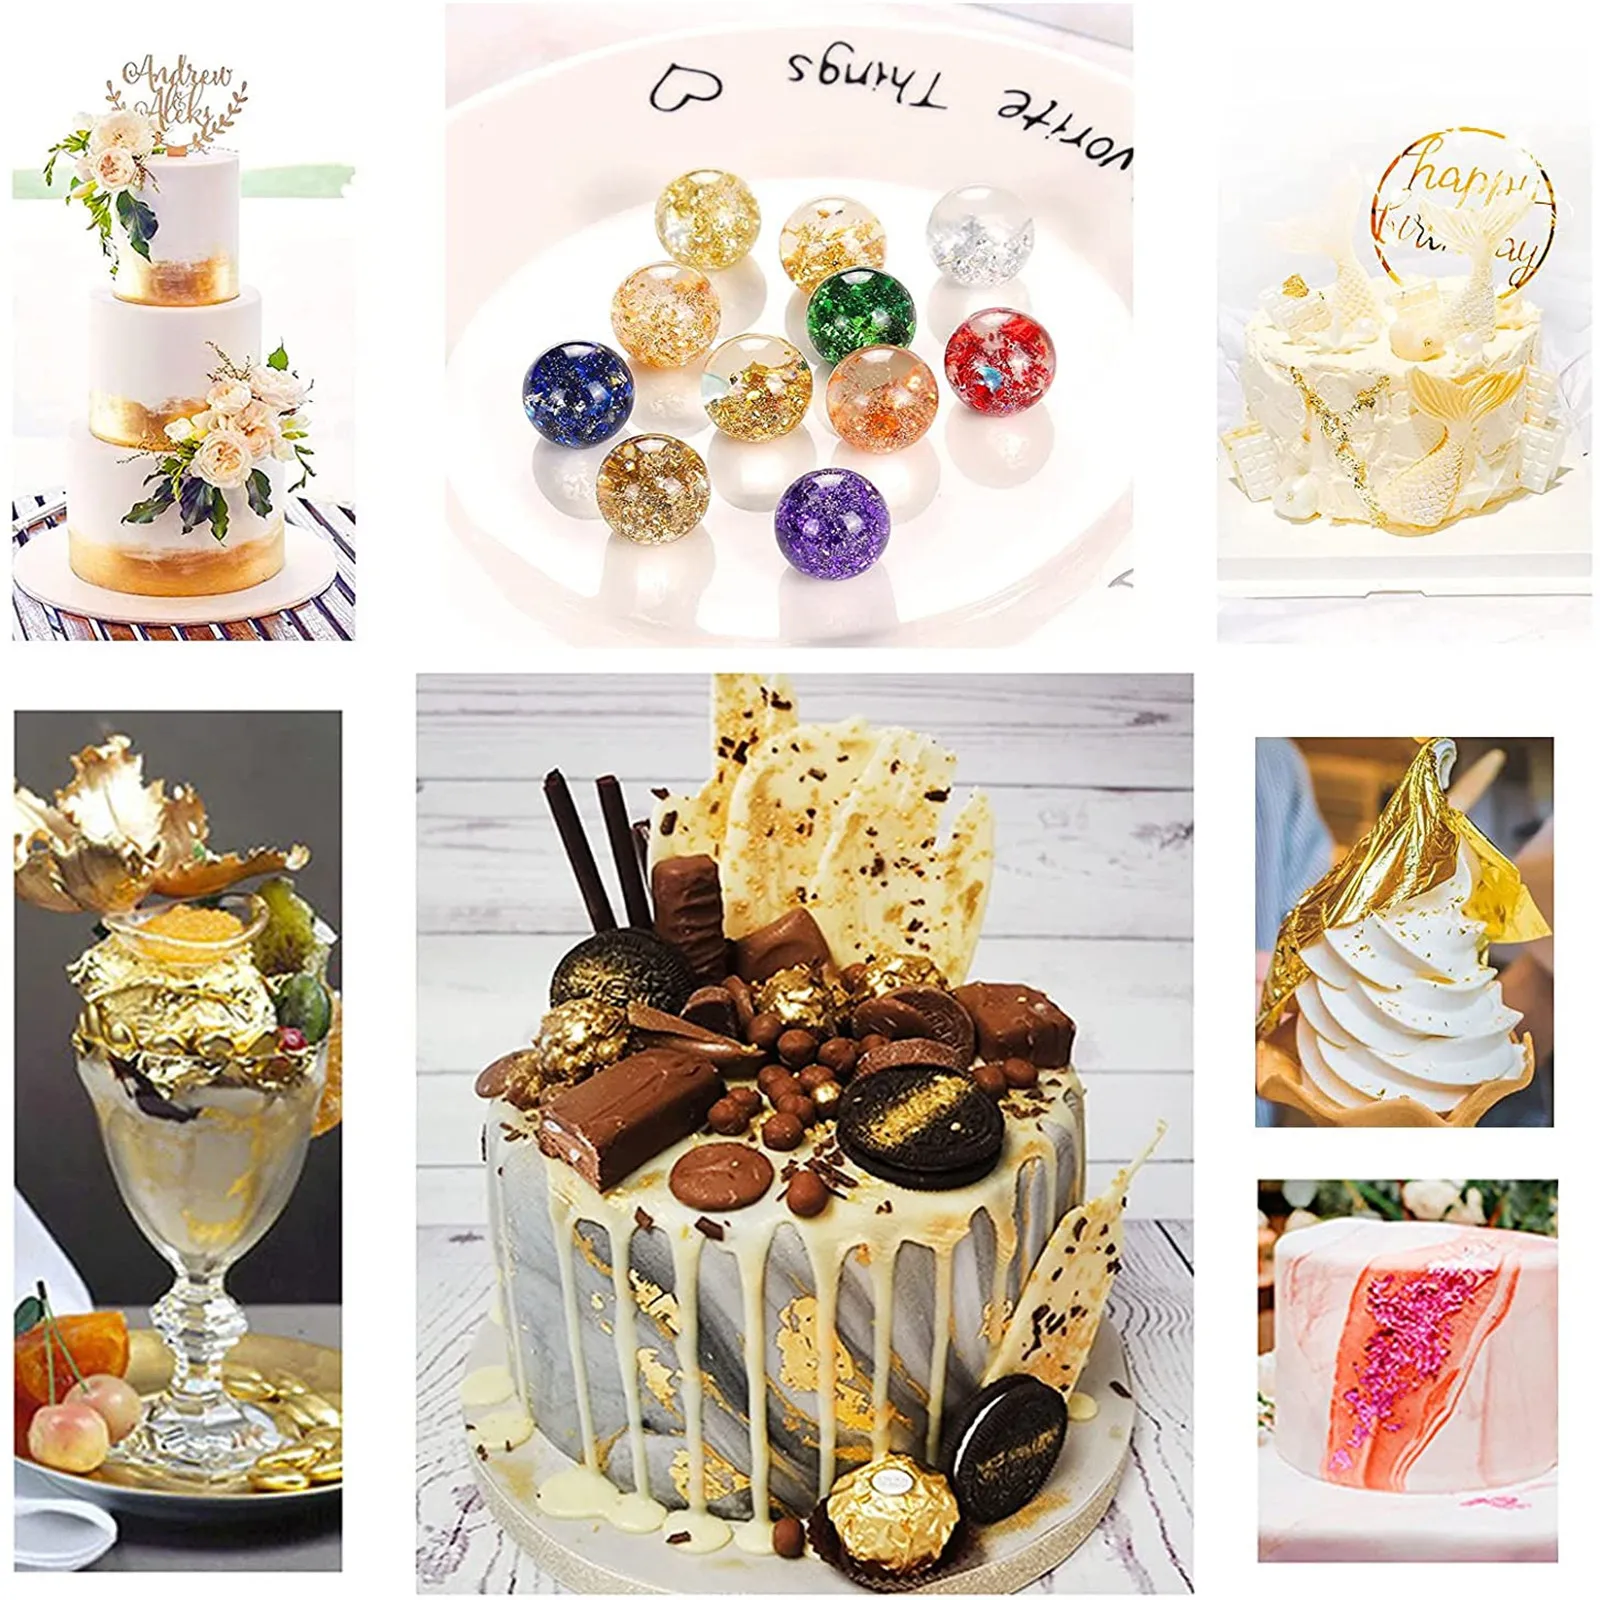 3g/Bottle Imitation Gold Silver Foil Paper Leaf Gilding DIY Art Craft Paper Birthday Party Wedding Cake Dessert Decorations